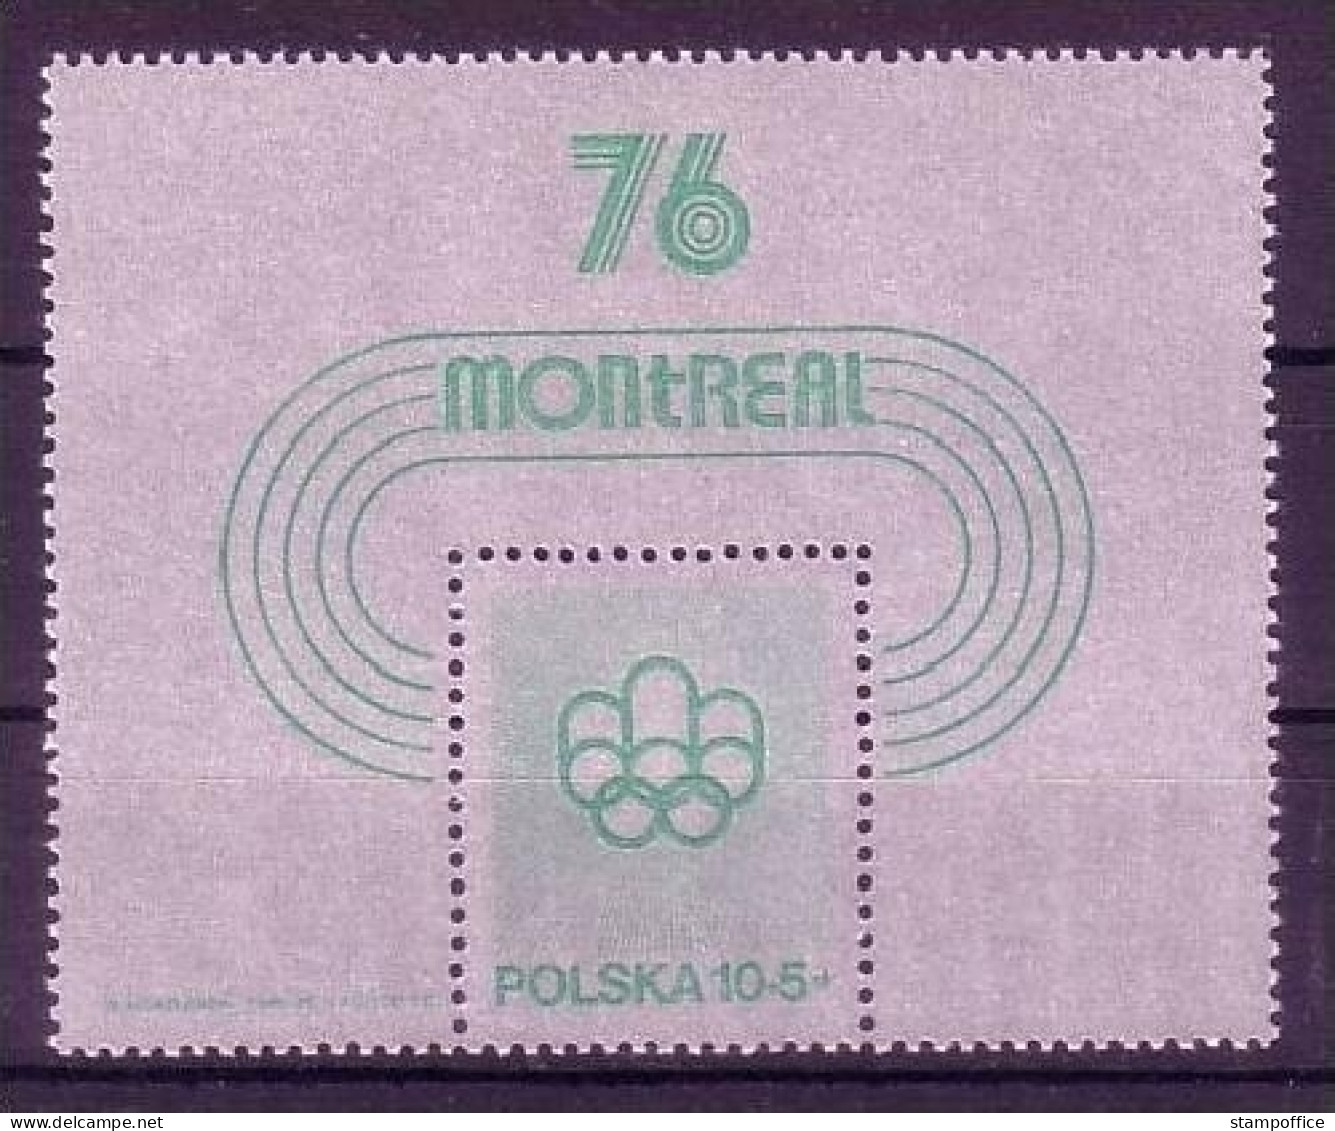 POLEN BLOCK 61 POSTFRISCH(MINT) OLYMPISCHE SOMMERSPIELE MONTREAL 1976 - Sommer 1976: Montreal